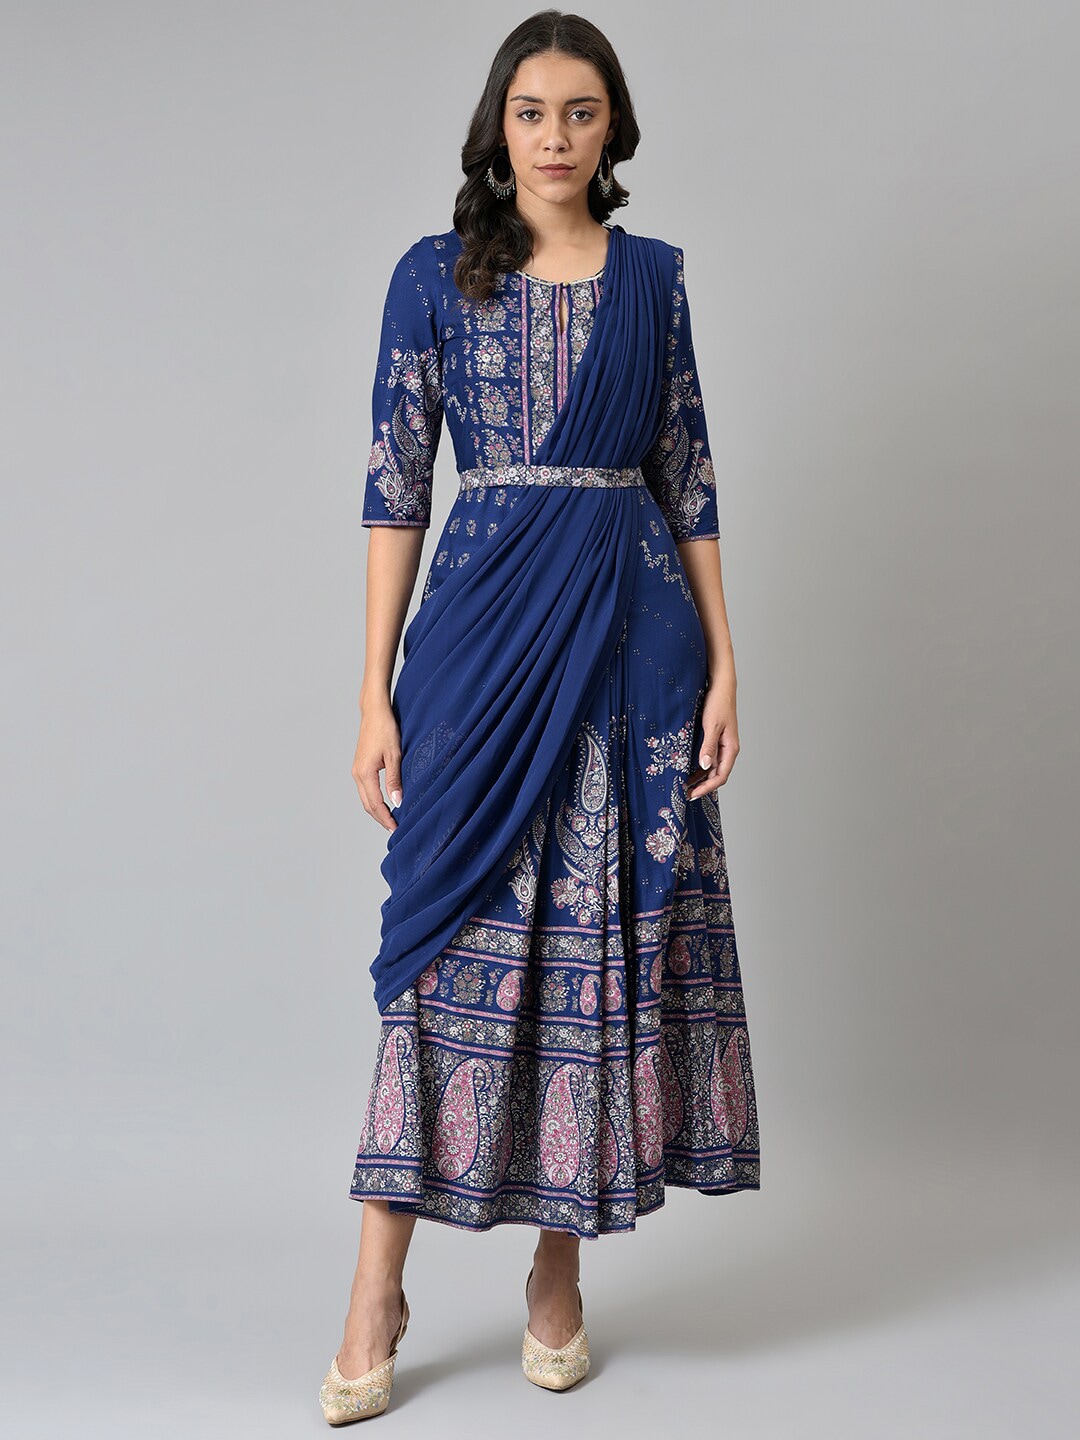 W Blue & Silver-Toned Ethnic Motifs Chiffon Ethnic Maxi Dress